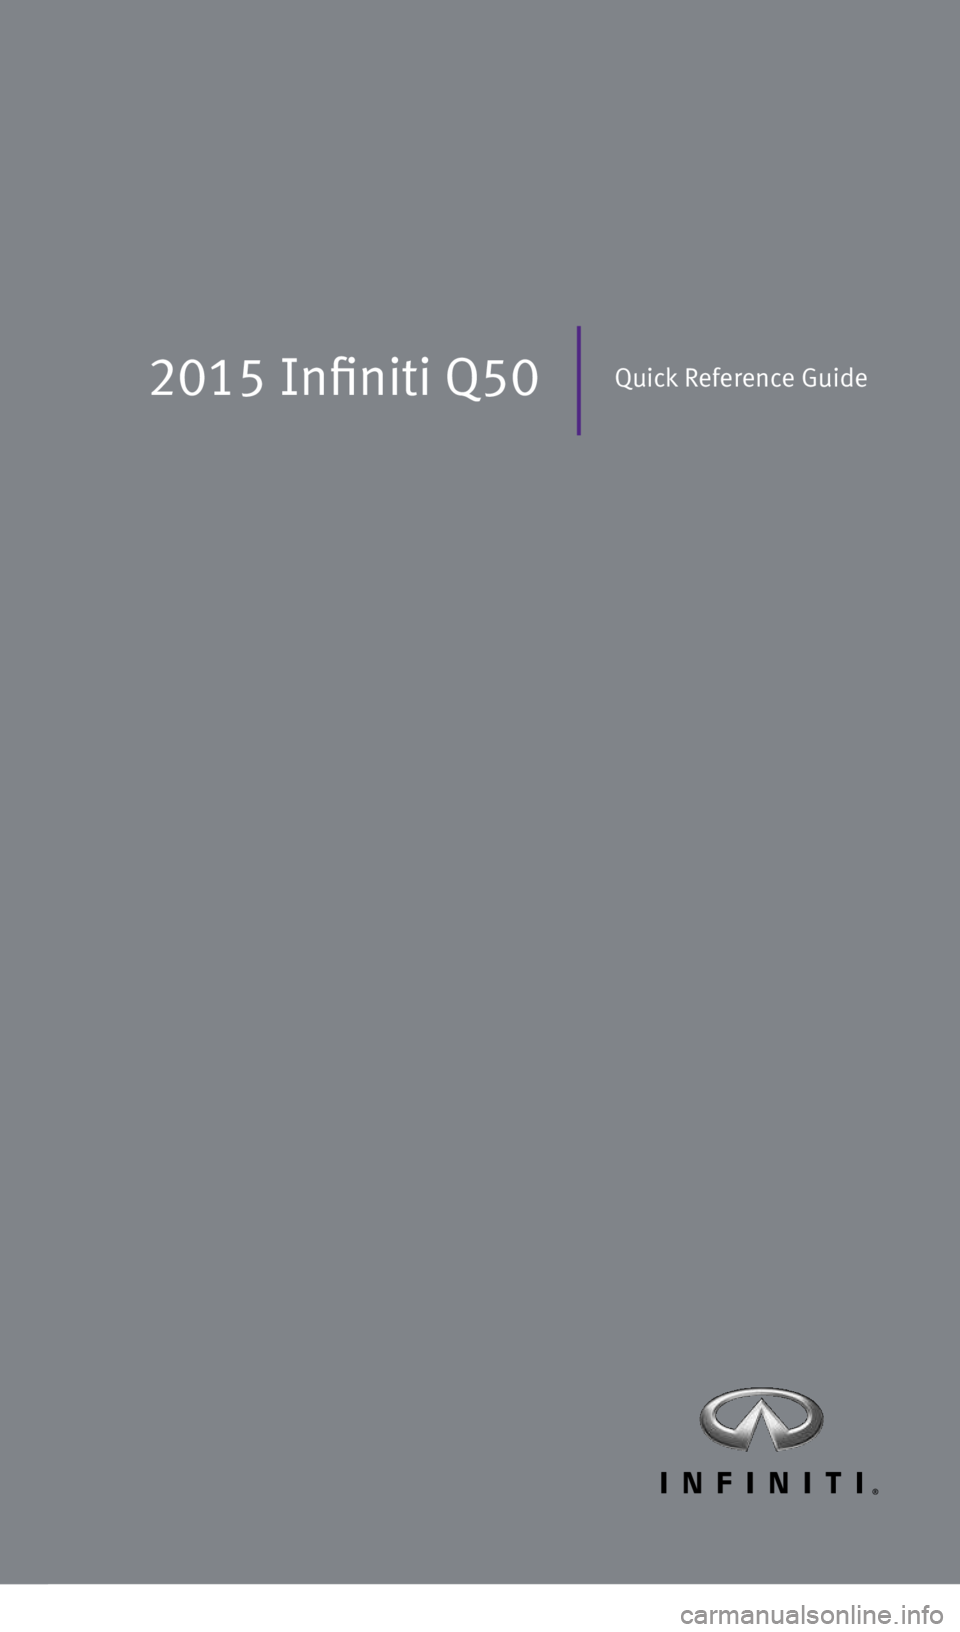 INFINITI Q50 2015  Quick Reference Guide 2015 Infiniti Q50Quick Reference Guide
2045927_15c_Infiniti_Q50_QRG_071415.indd   27/14/15   3:38 PM 